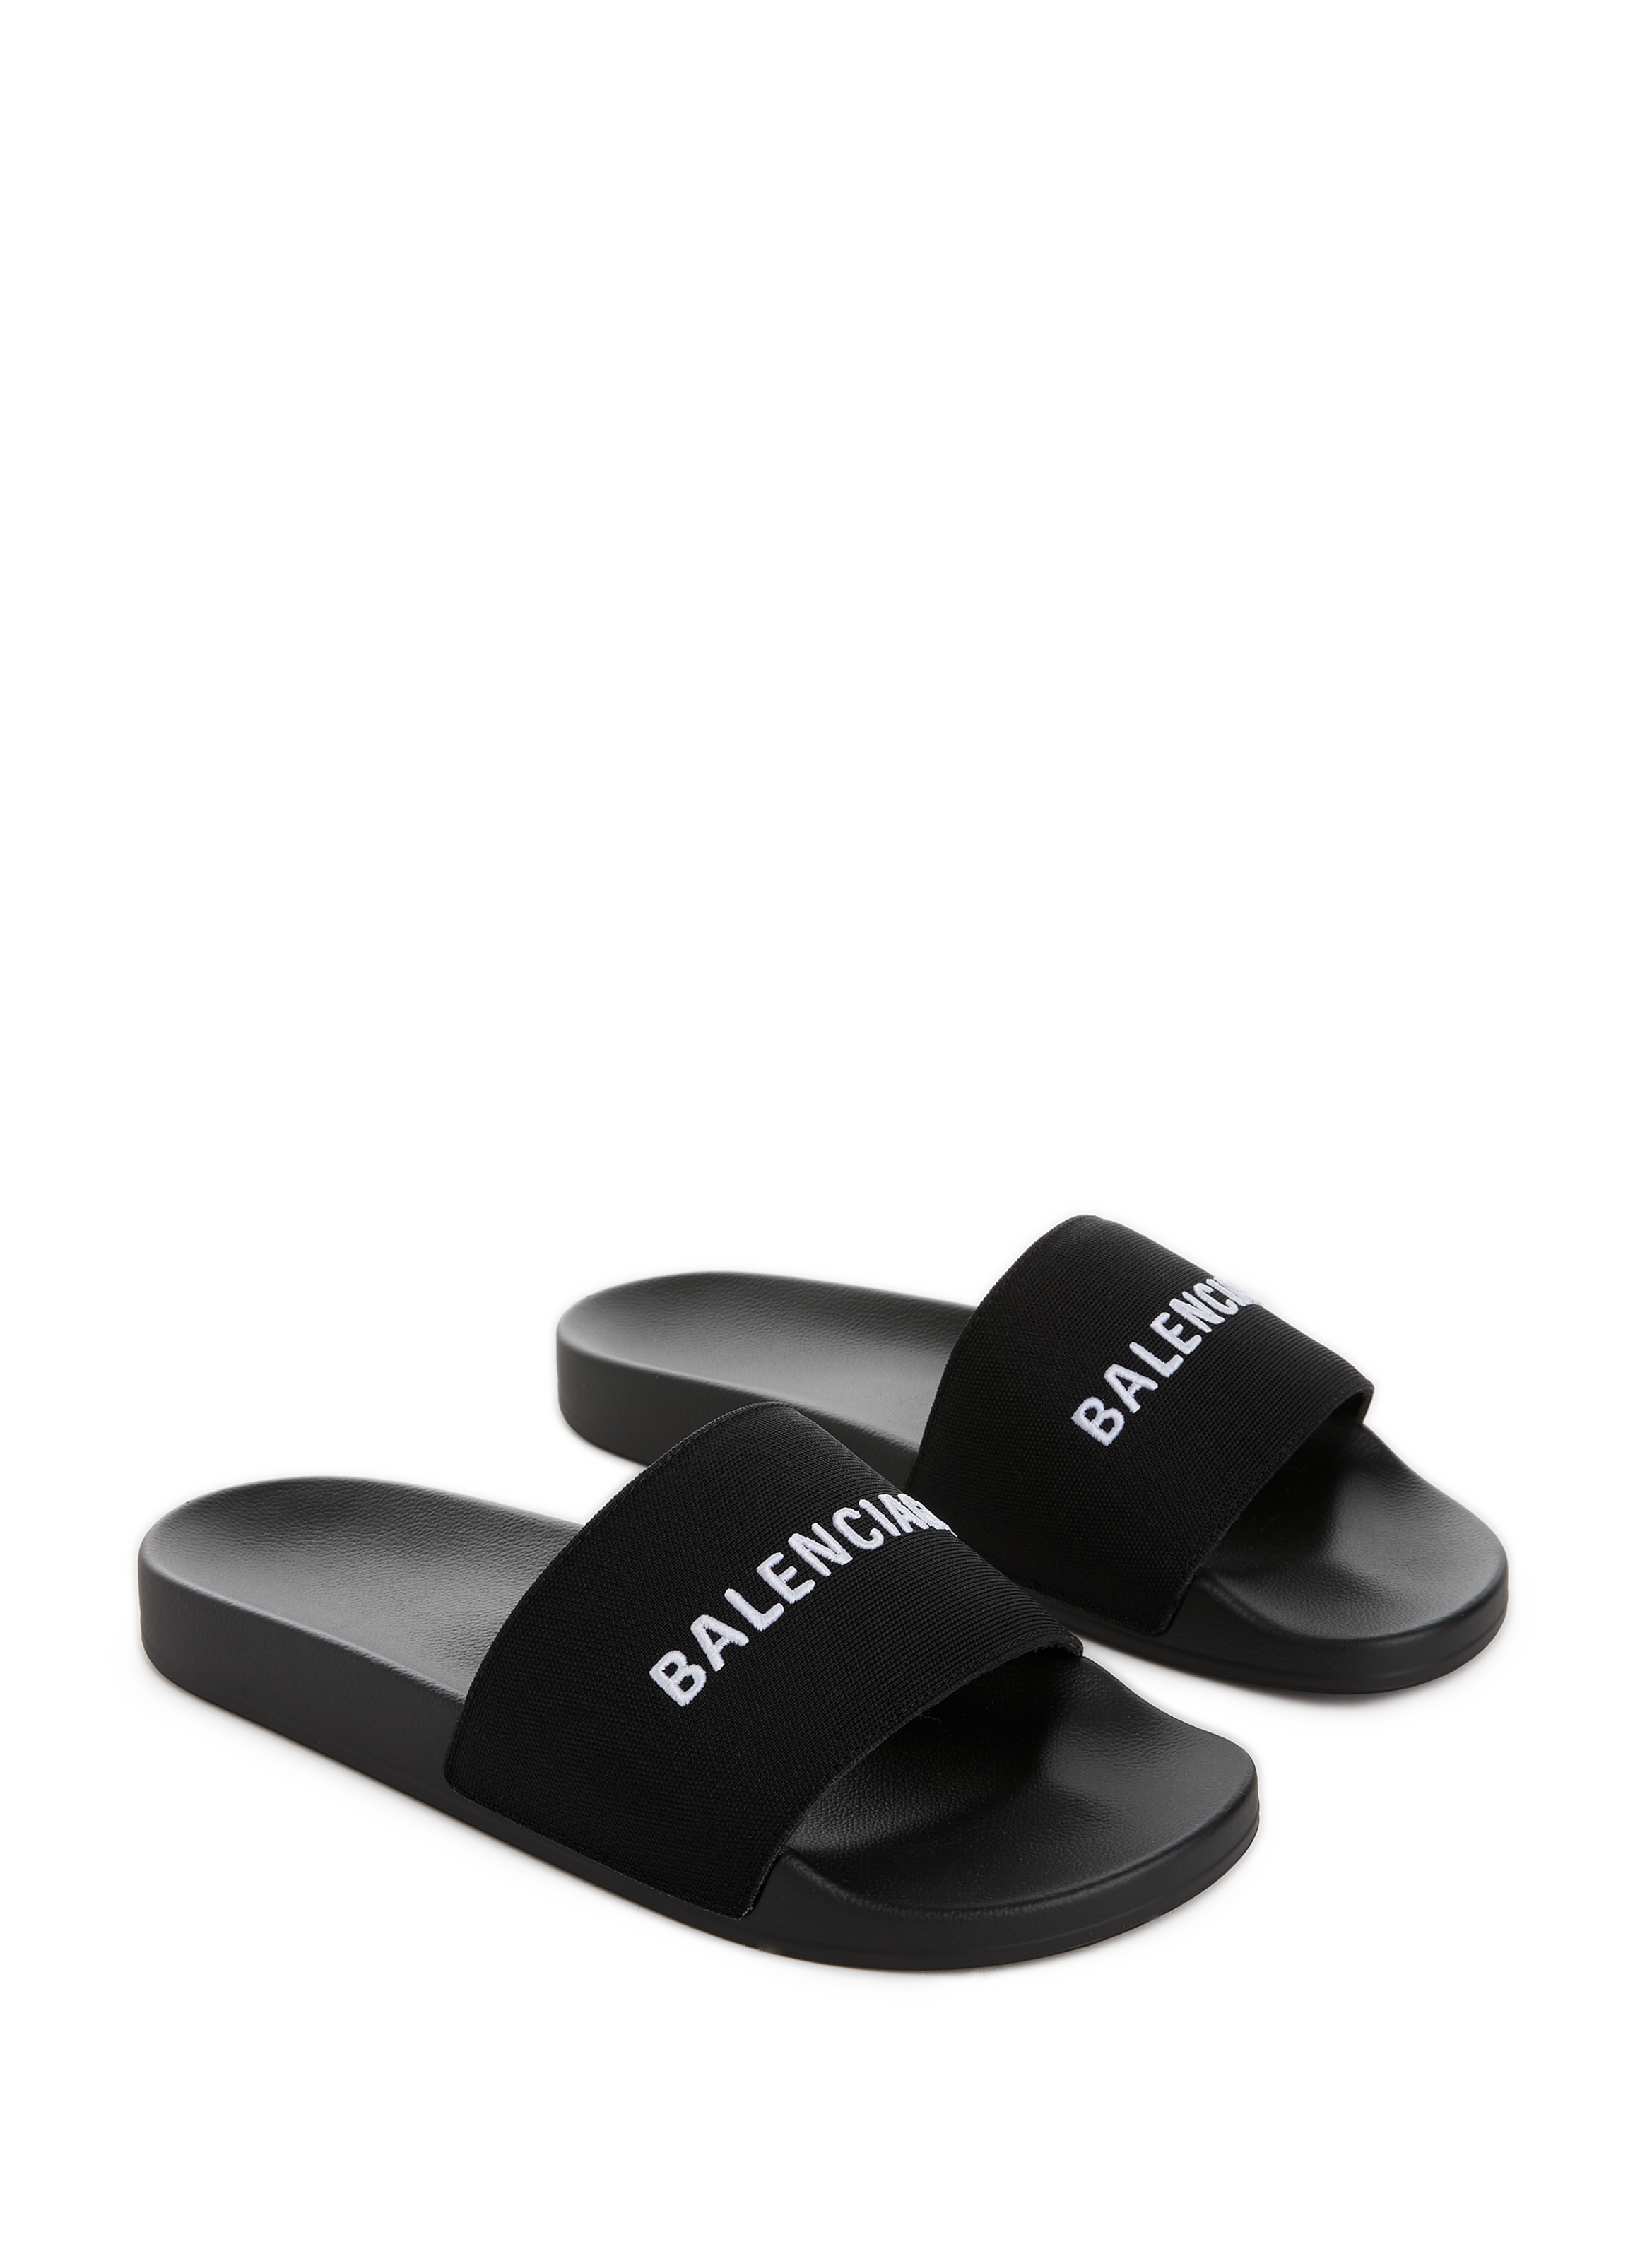 BALENCIAGA  Logo Sliders  Women  Pool Shoes  Flannels